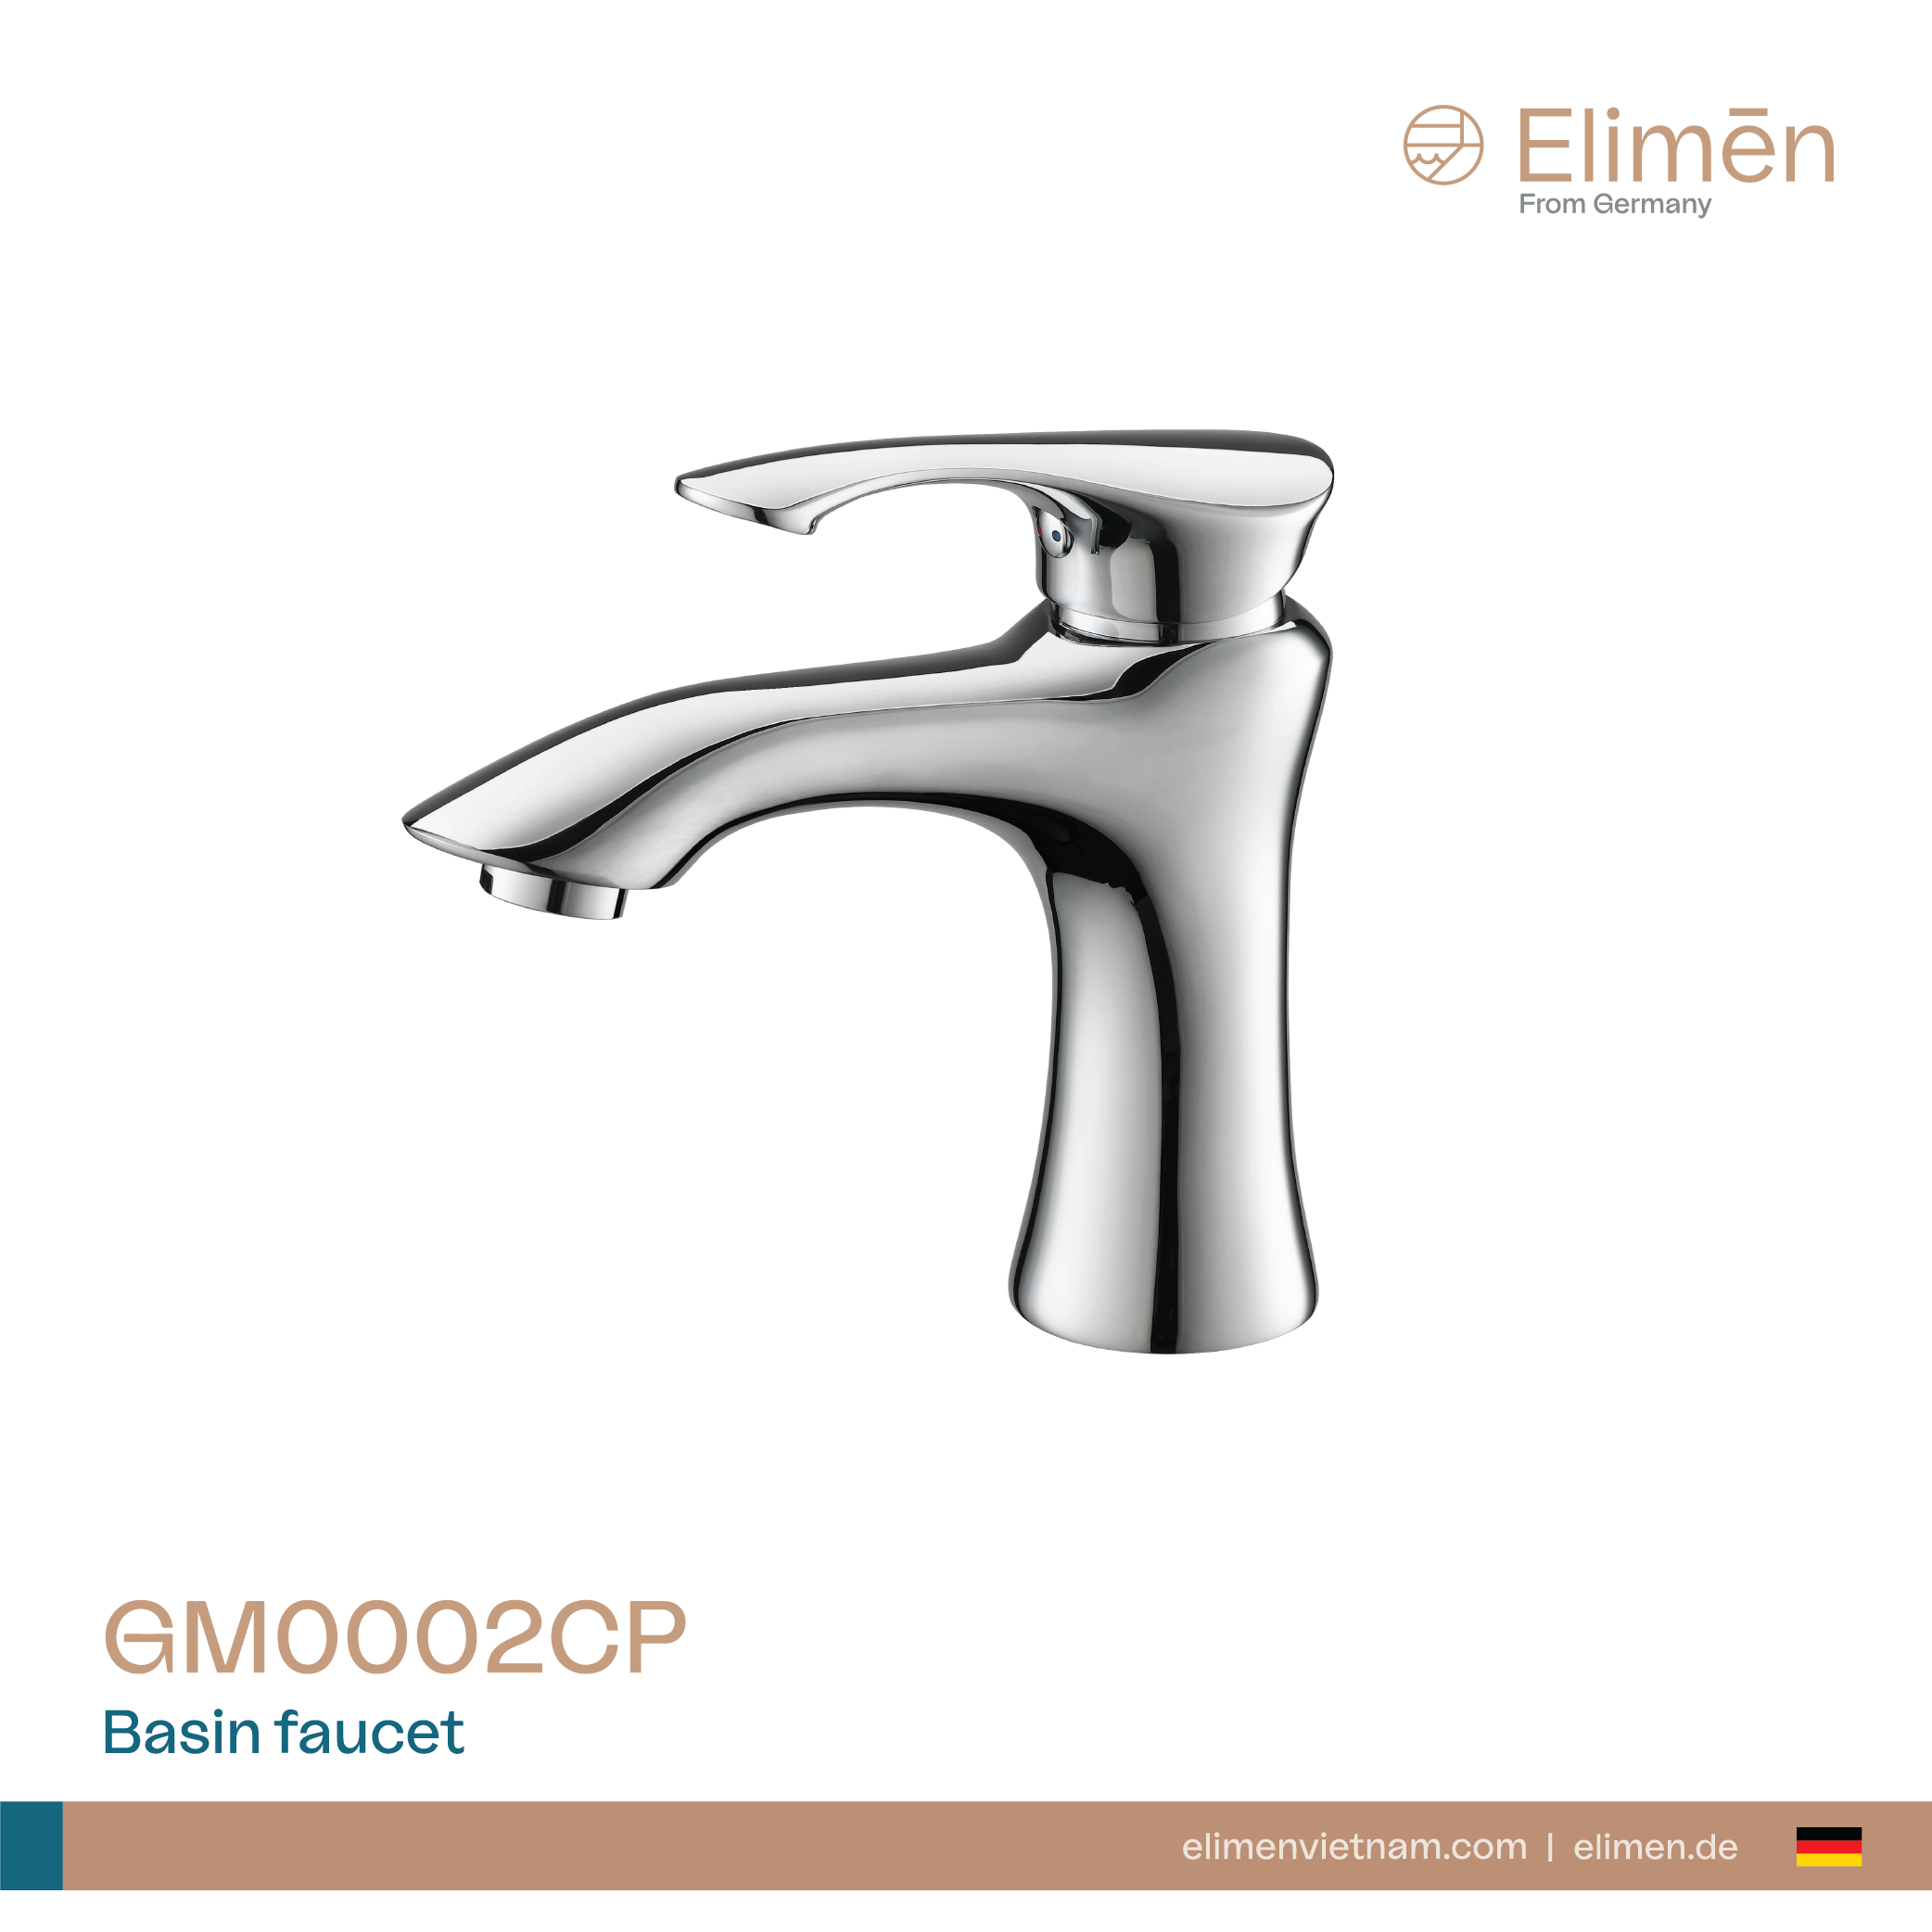 Vòi lavabo Elimen - Mã GM0002CP